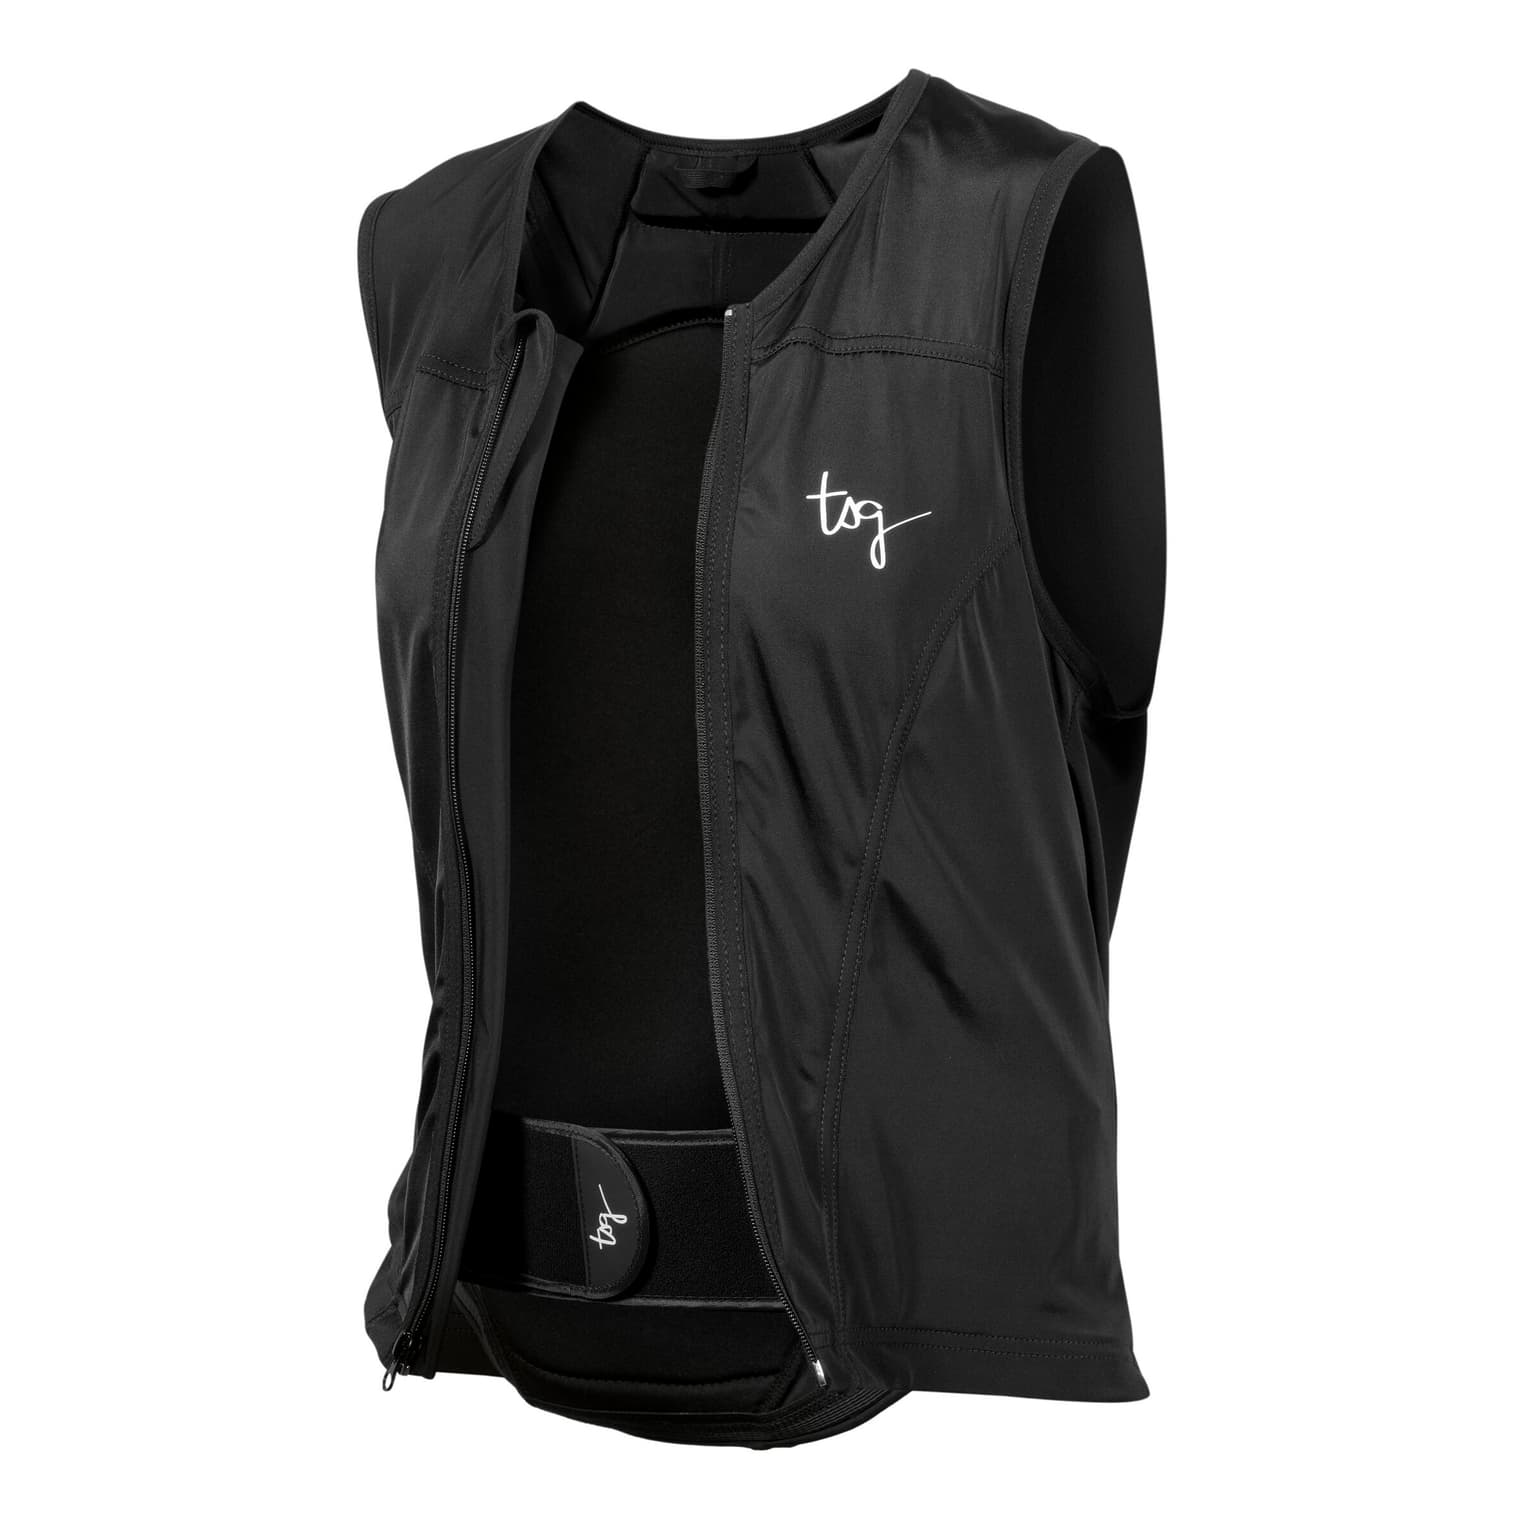 Tsg Tsg Backbone Vest A Protections noir 3